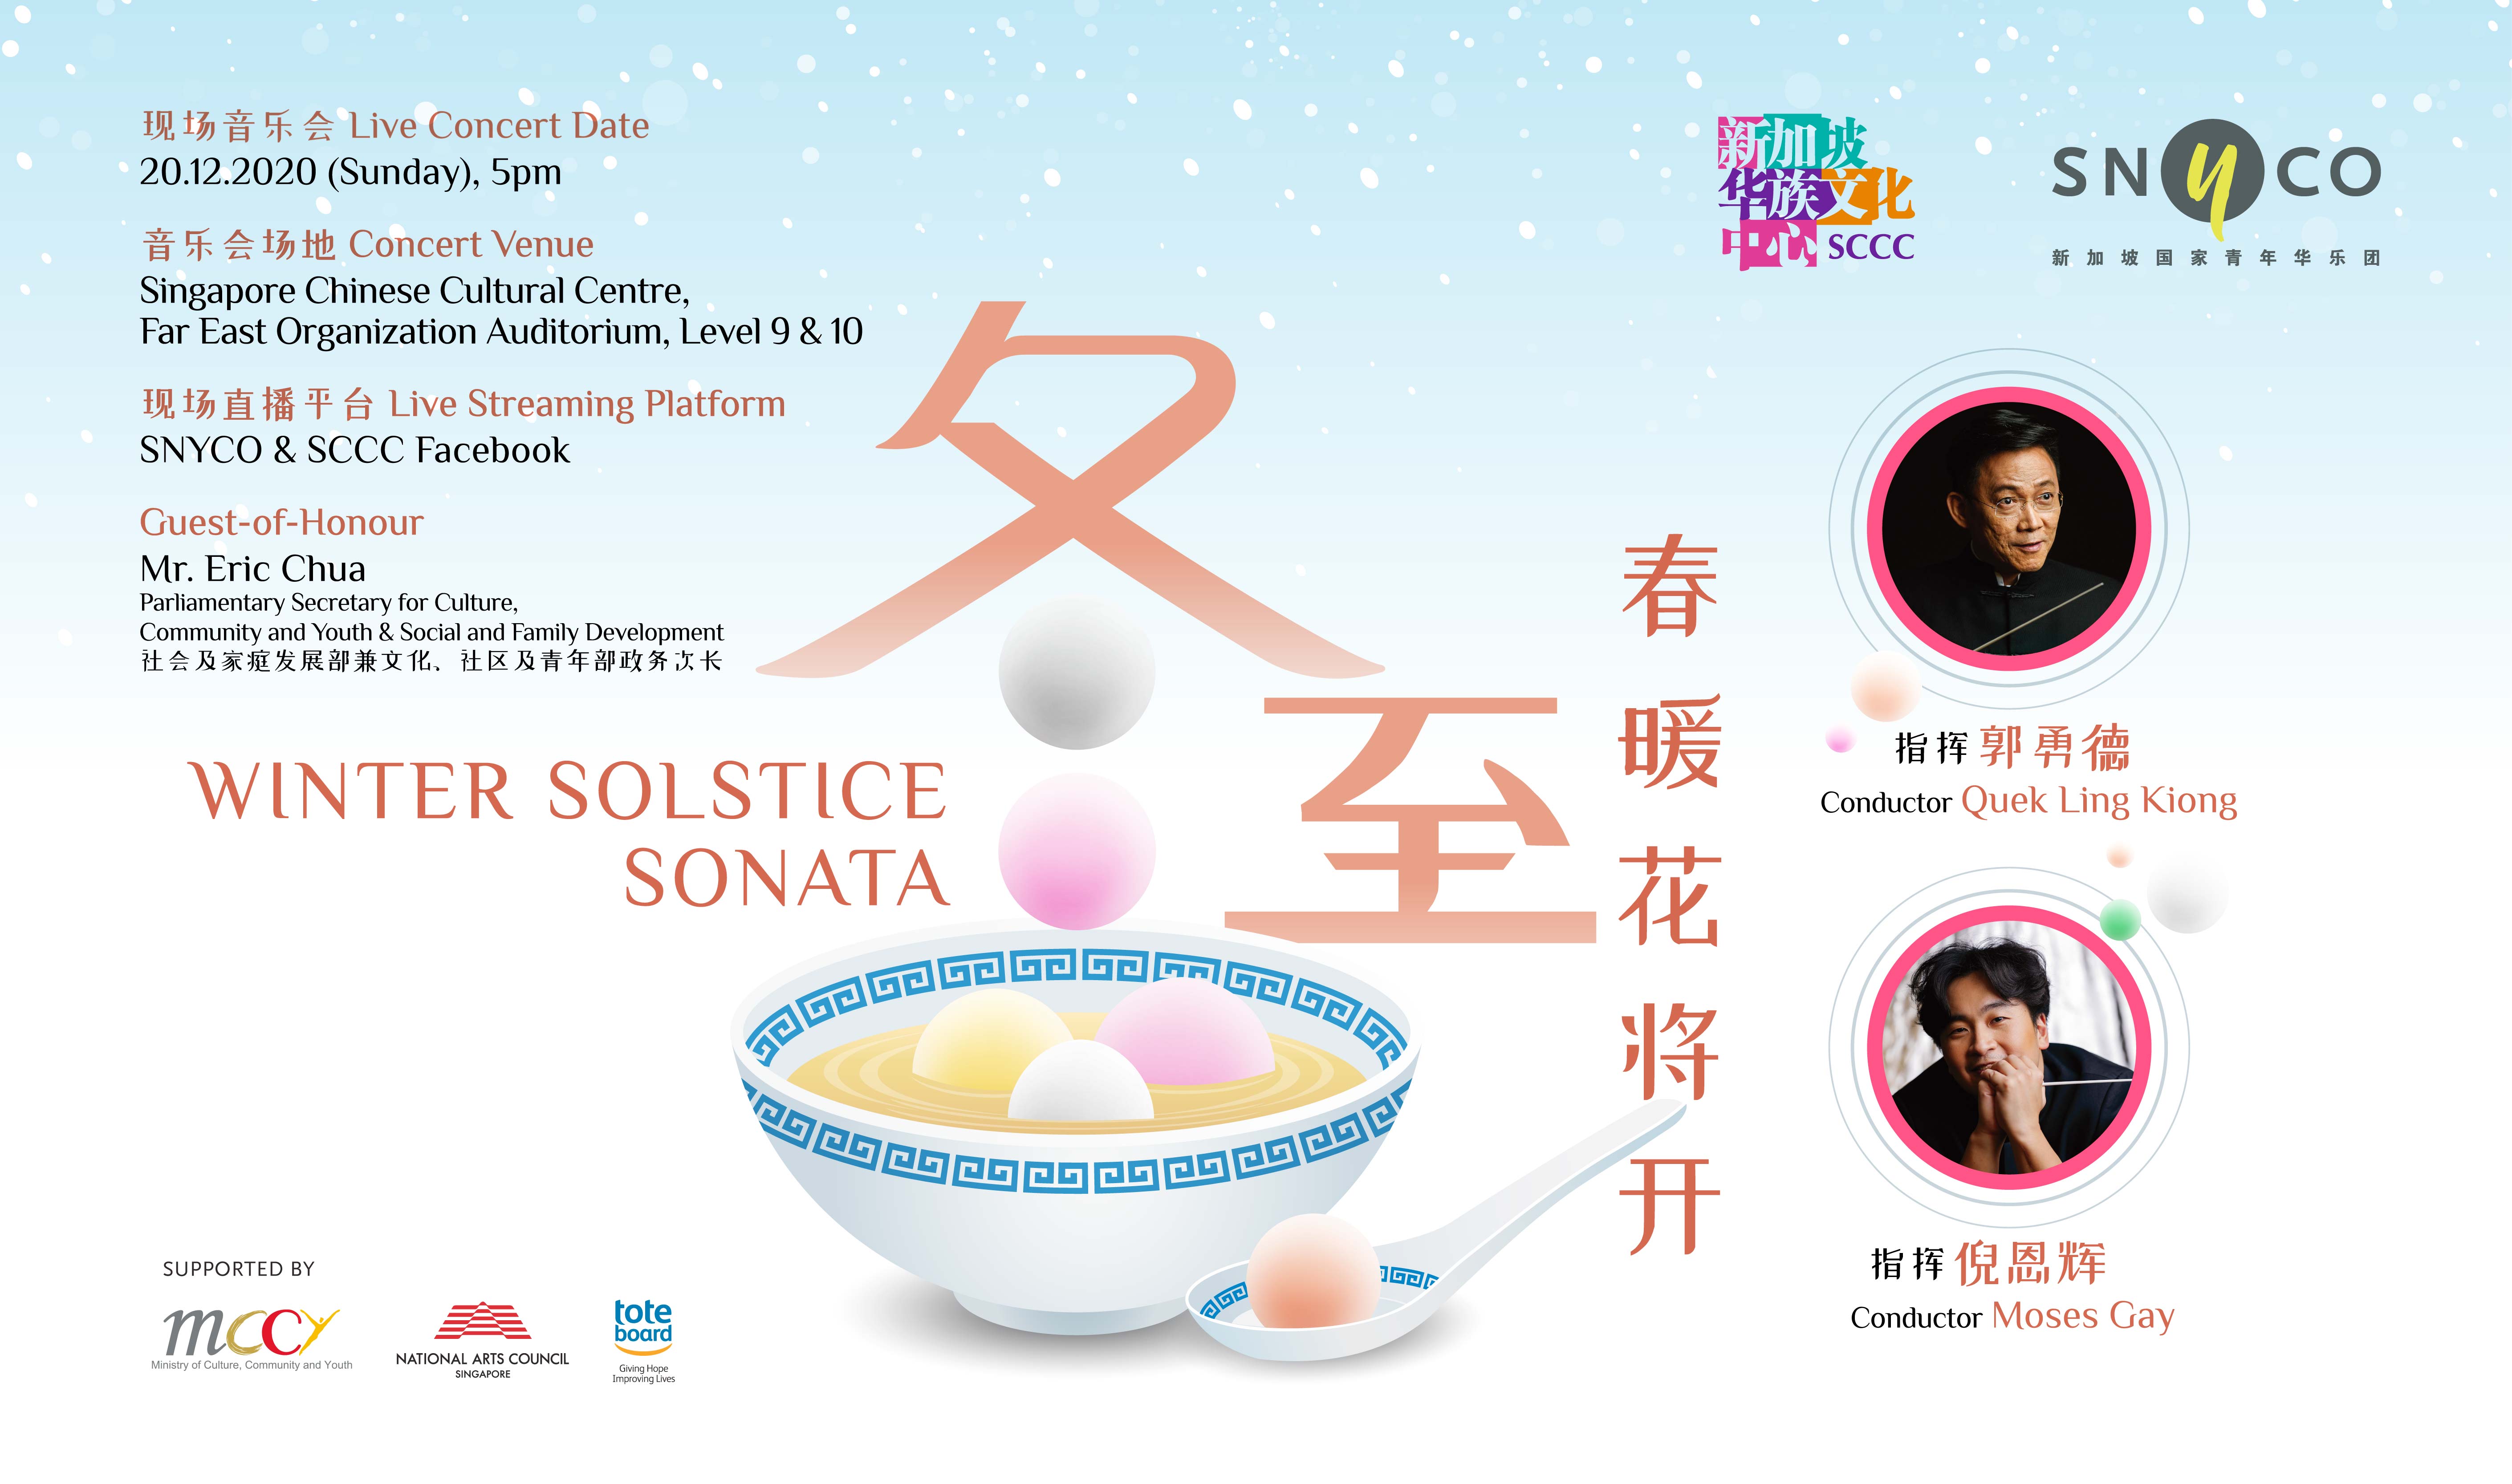 Winter Solstic Sonata